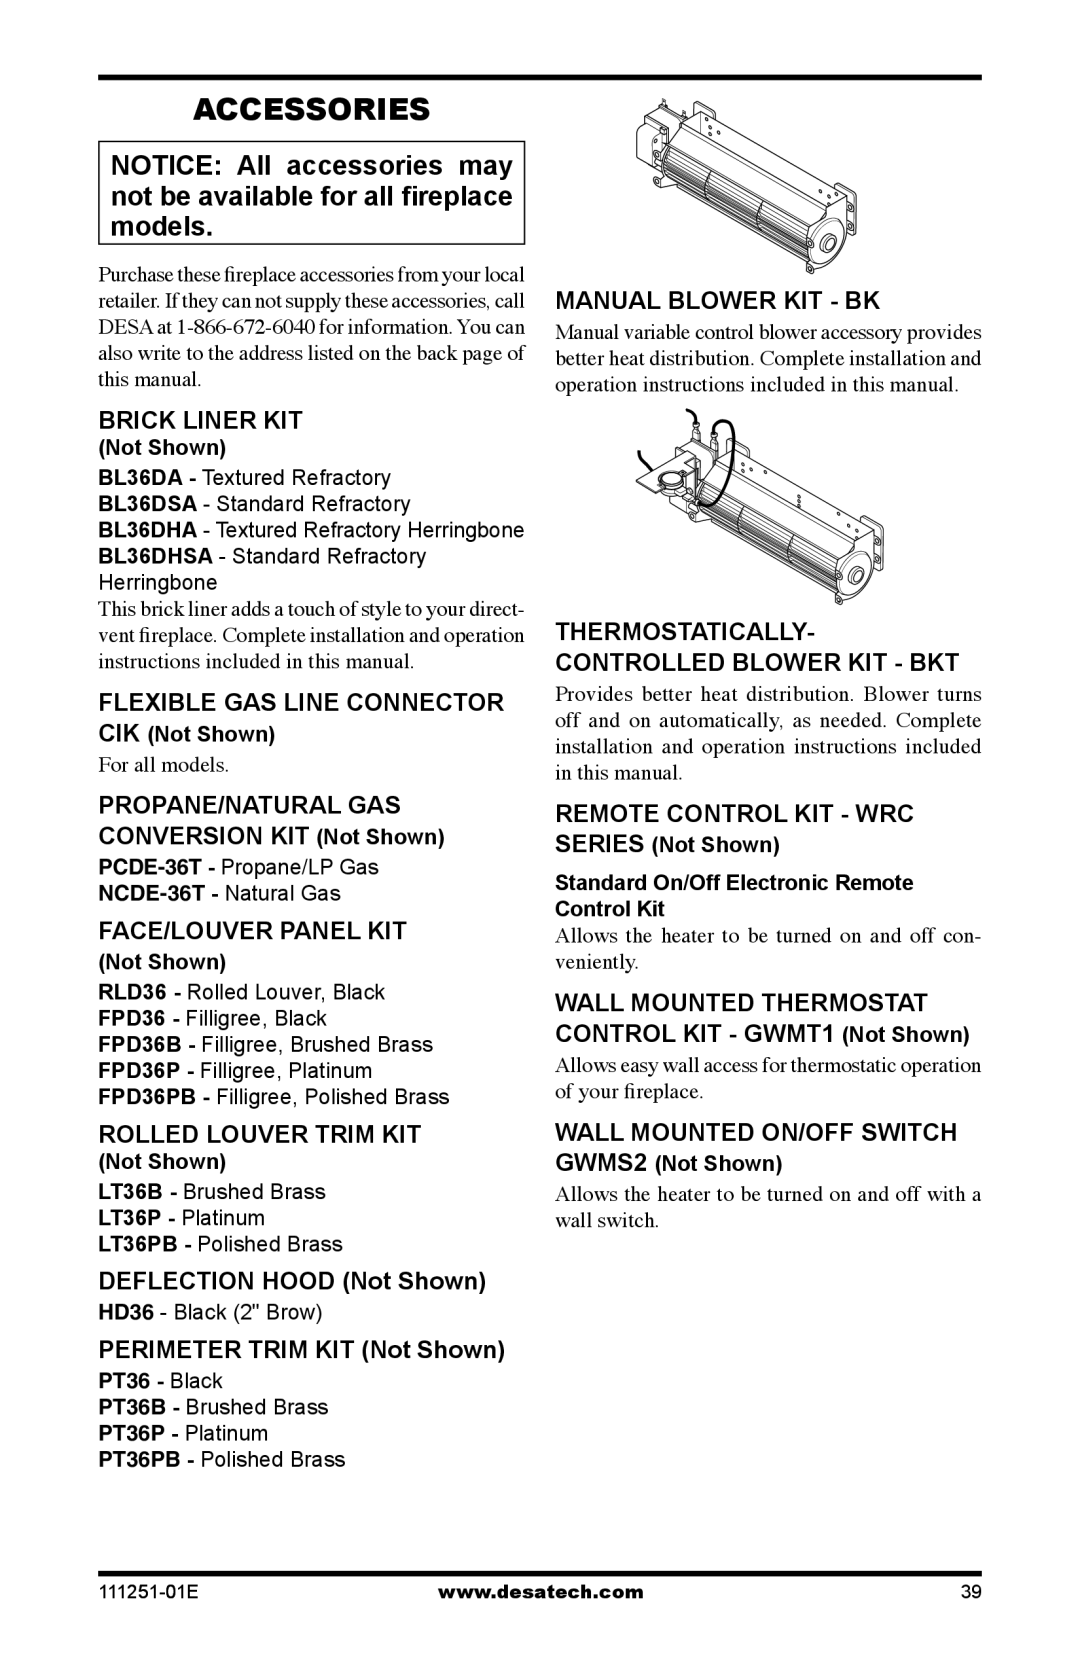 Desa (V)T36EPA Brick Liner kit, Flexible gas Line connector, Propane/natural gas conversion kit Not Shown 